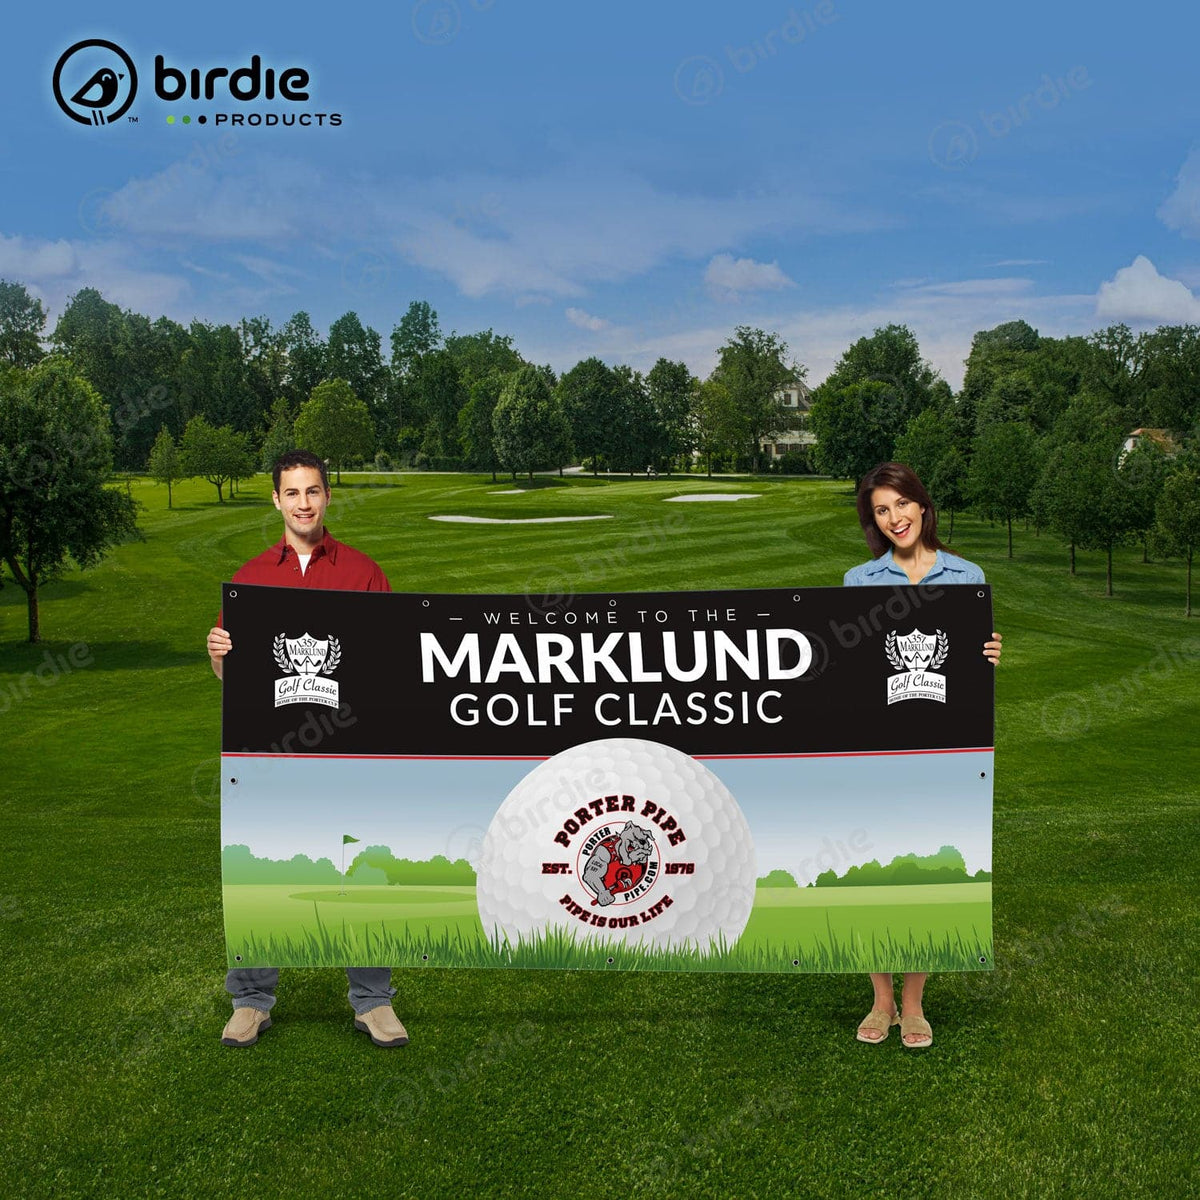 golf course banner